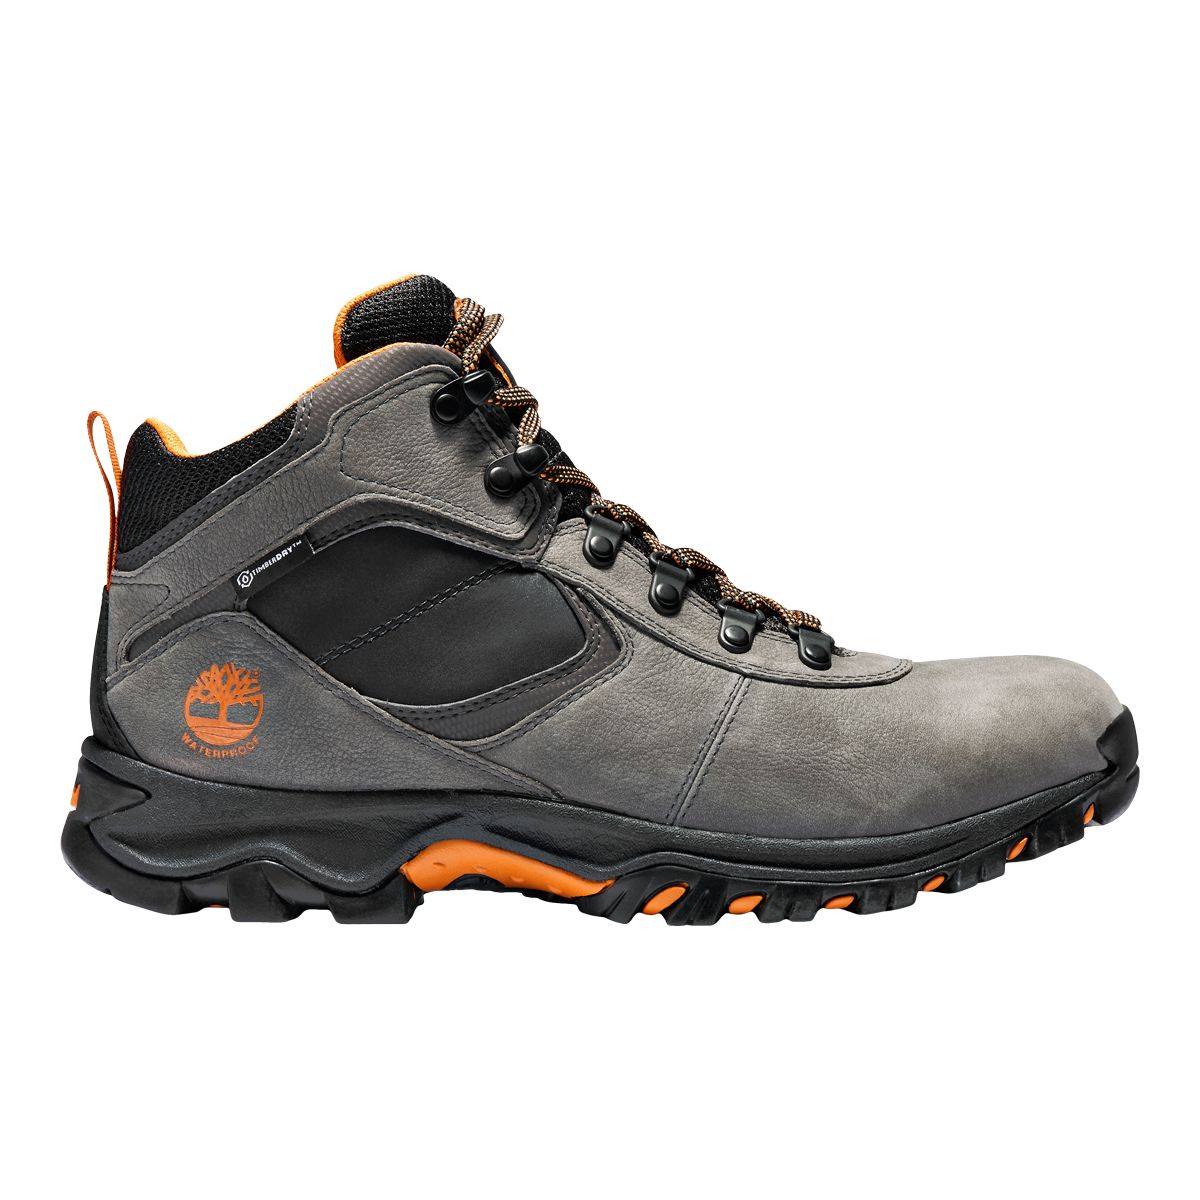 Timberland Men's MT Maddsen Hiking Boots Waterproof